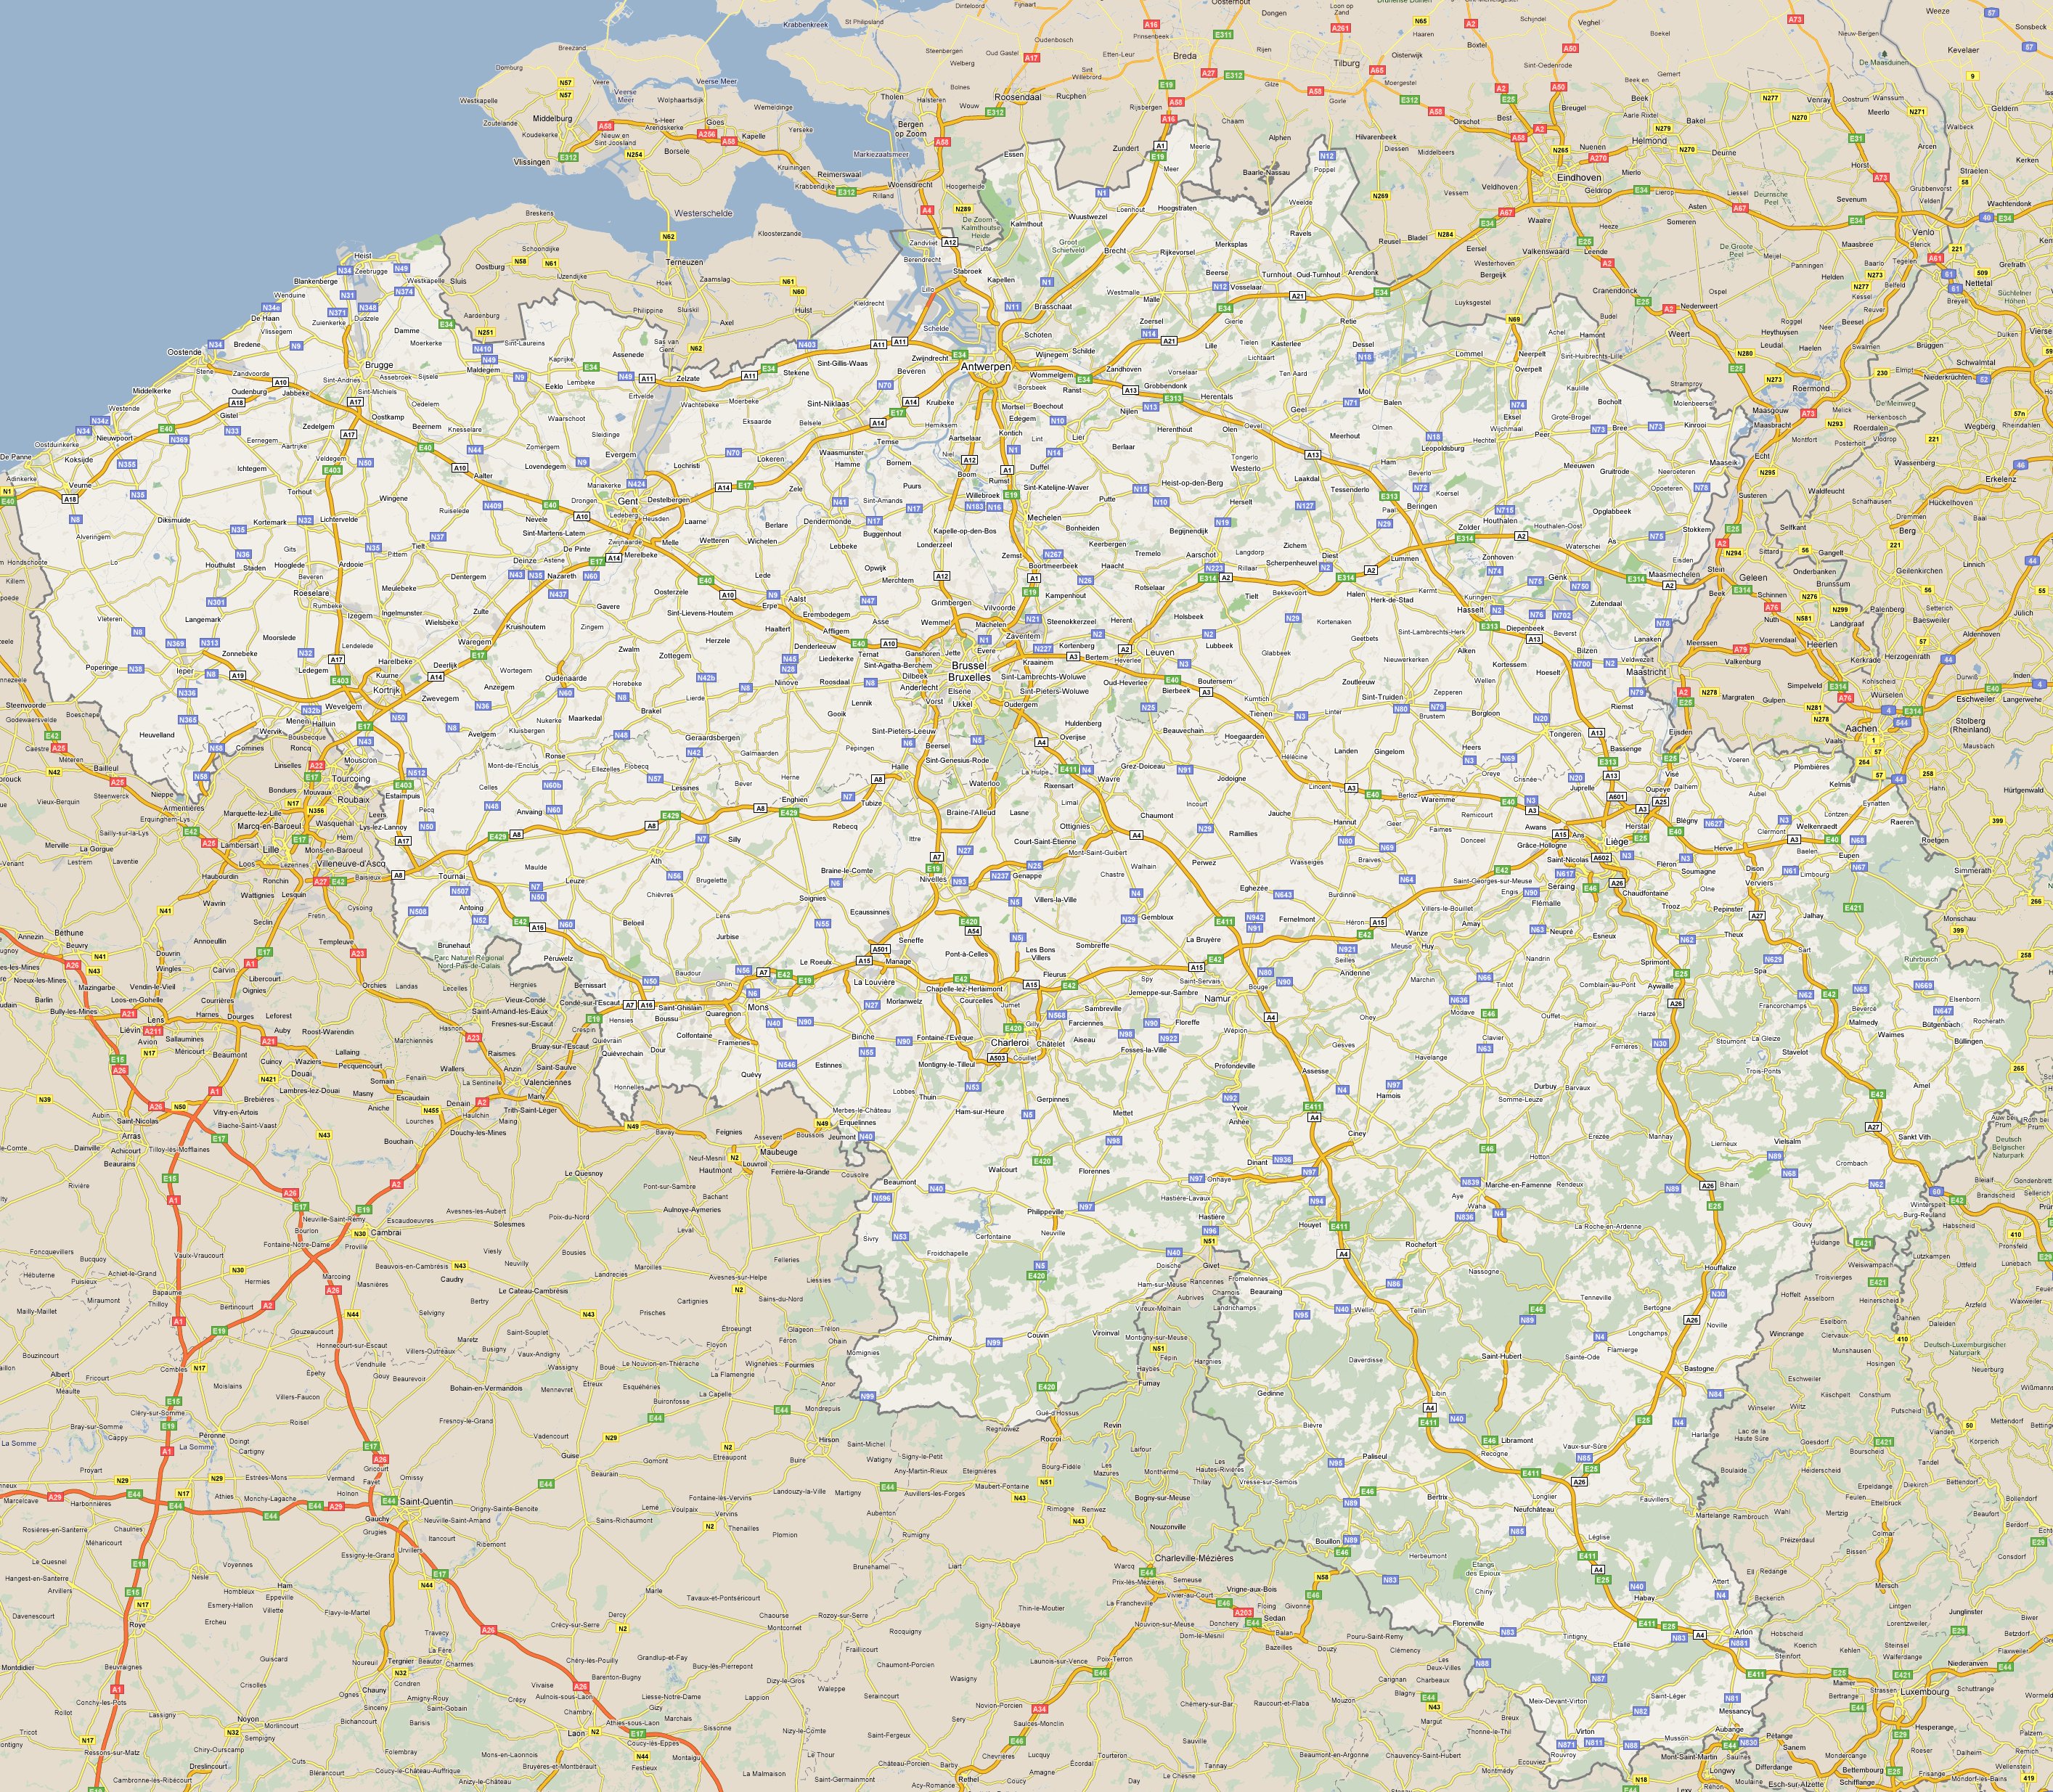 geografska karta portugala Footiemap.  Belgium (2010 2011)   Map of Top Tier Belgian  geografska karta portugala